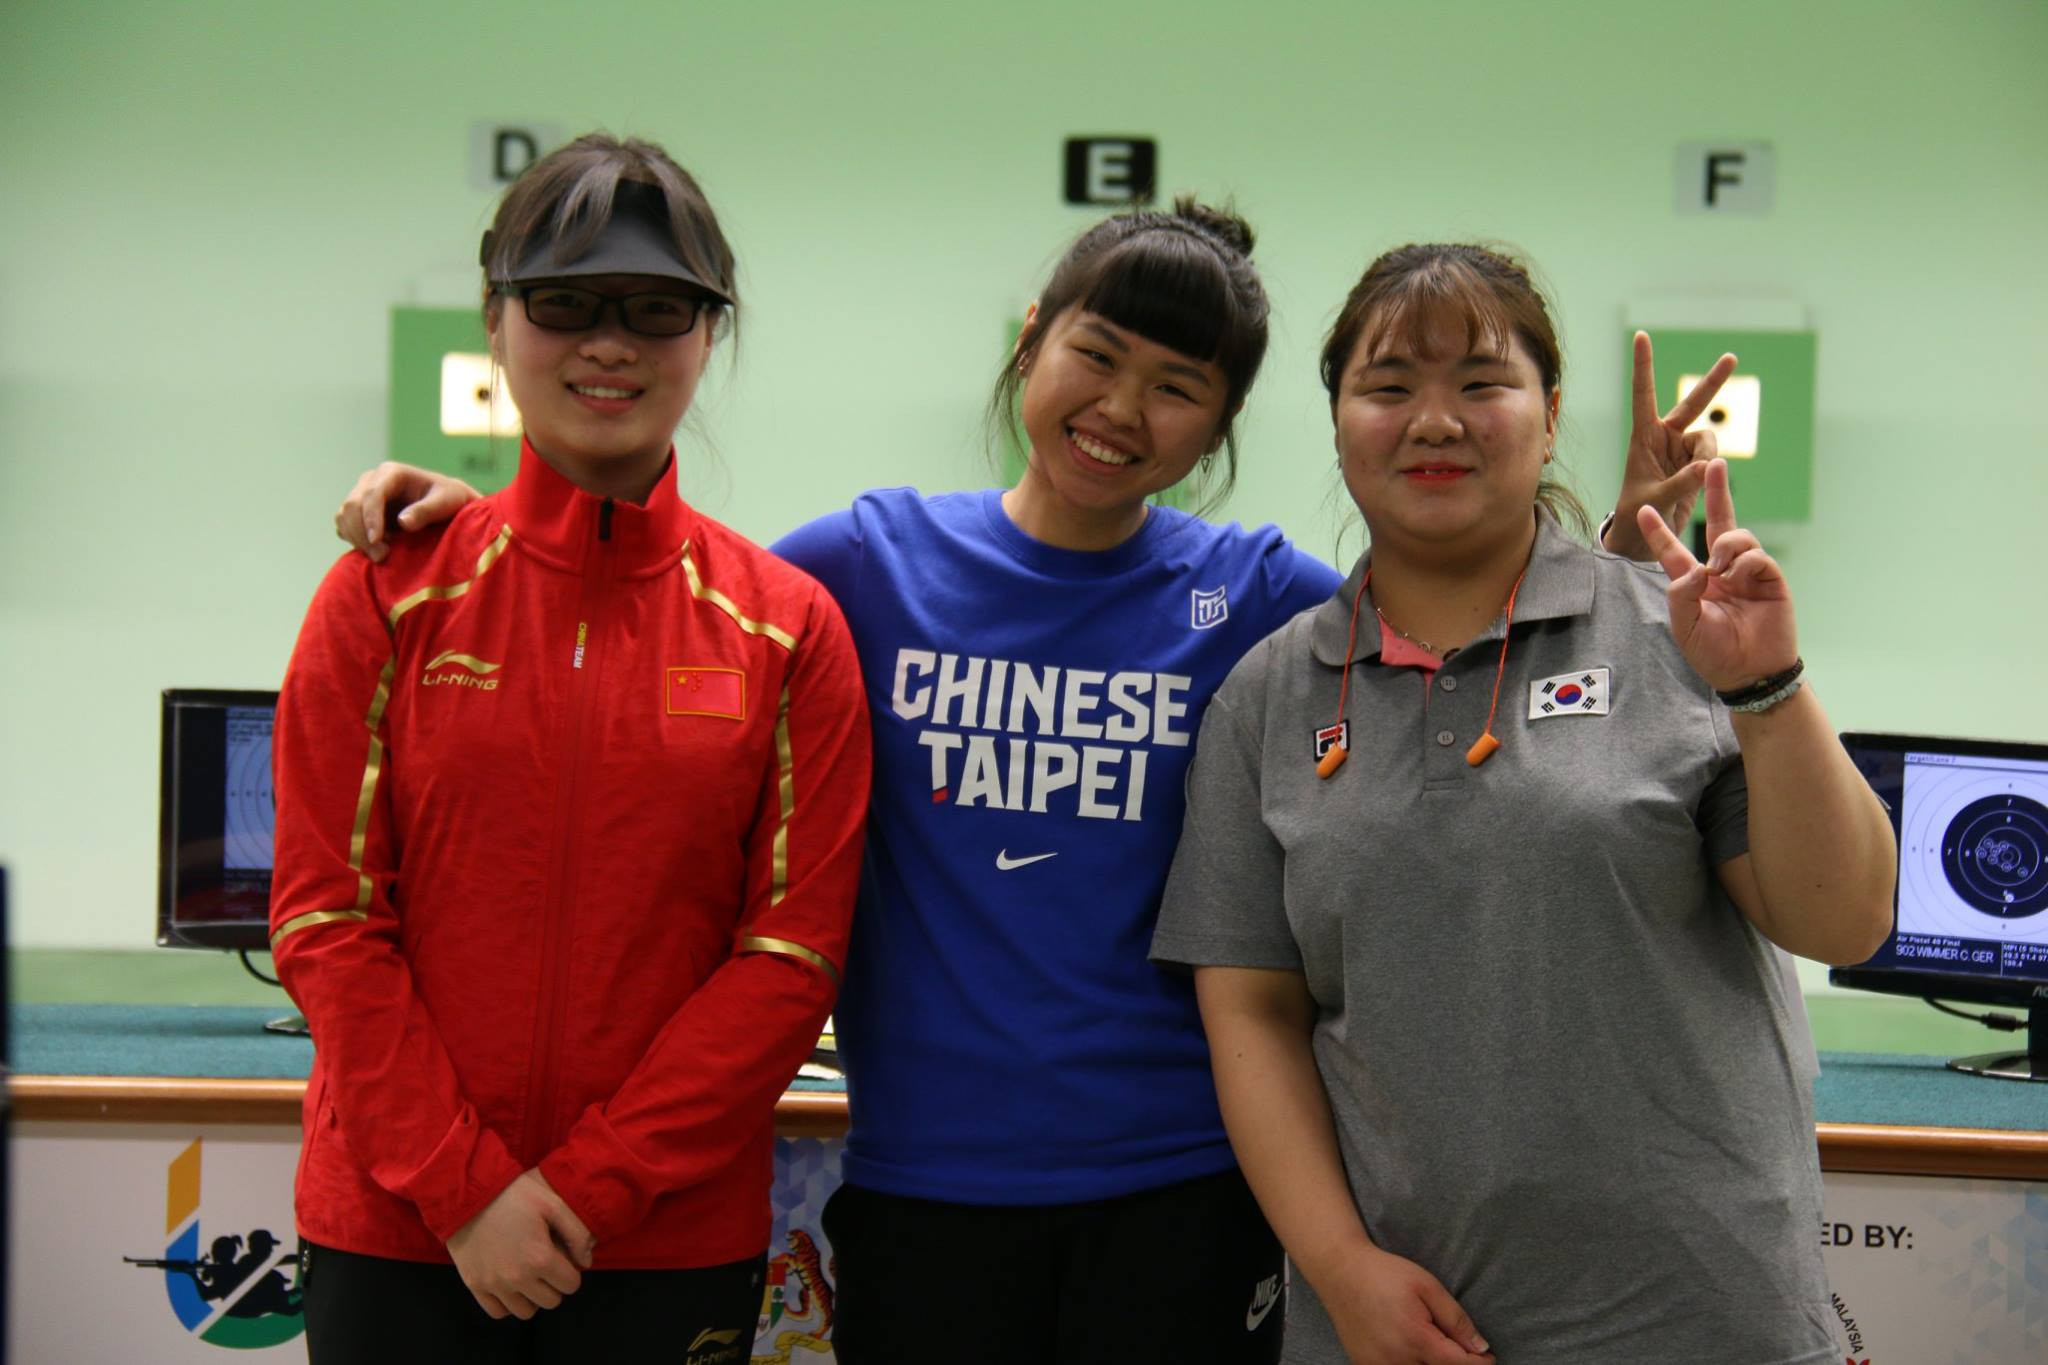 Chinese Taipei were among the medal winners today in Kuala Lumpur ©FISU